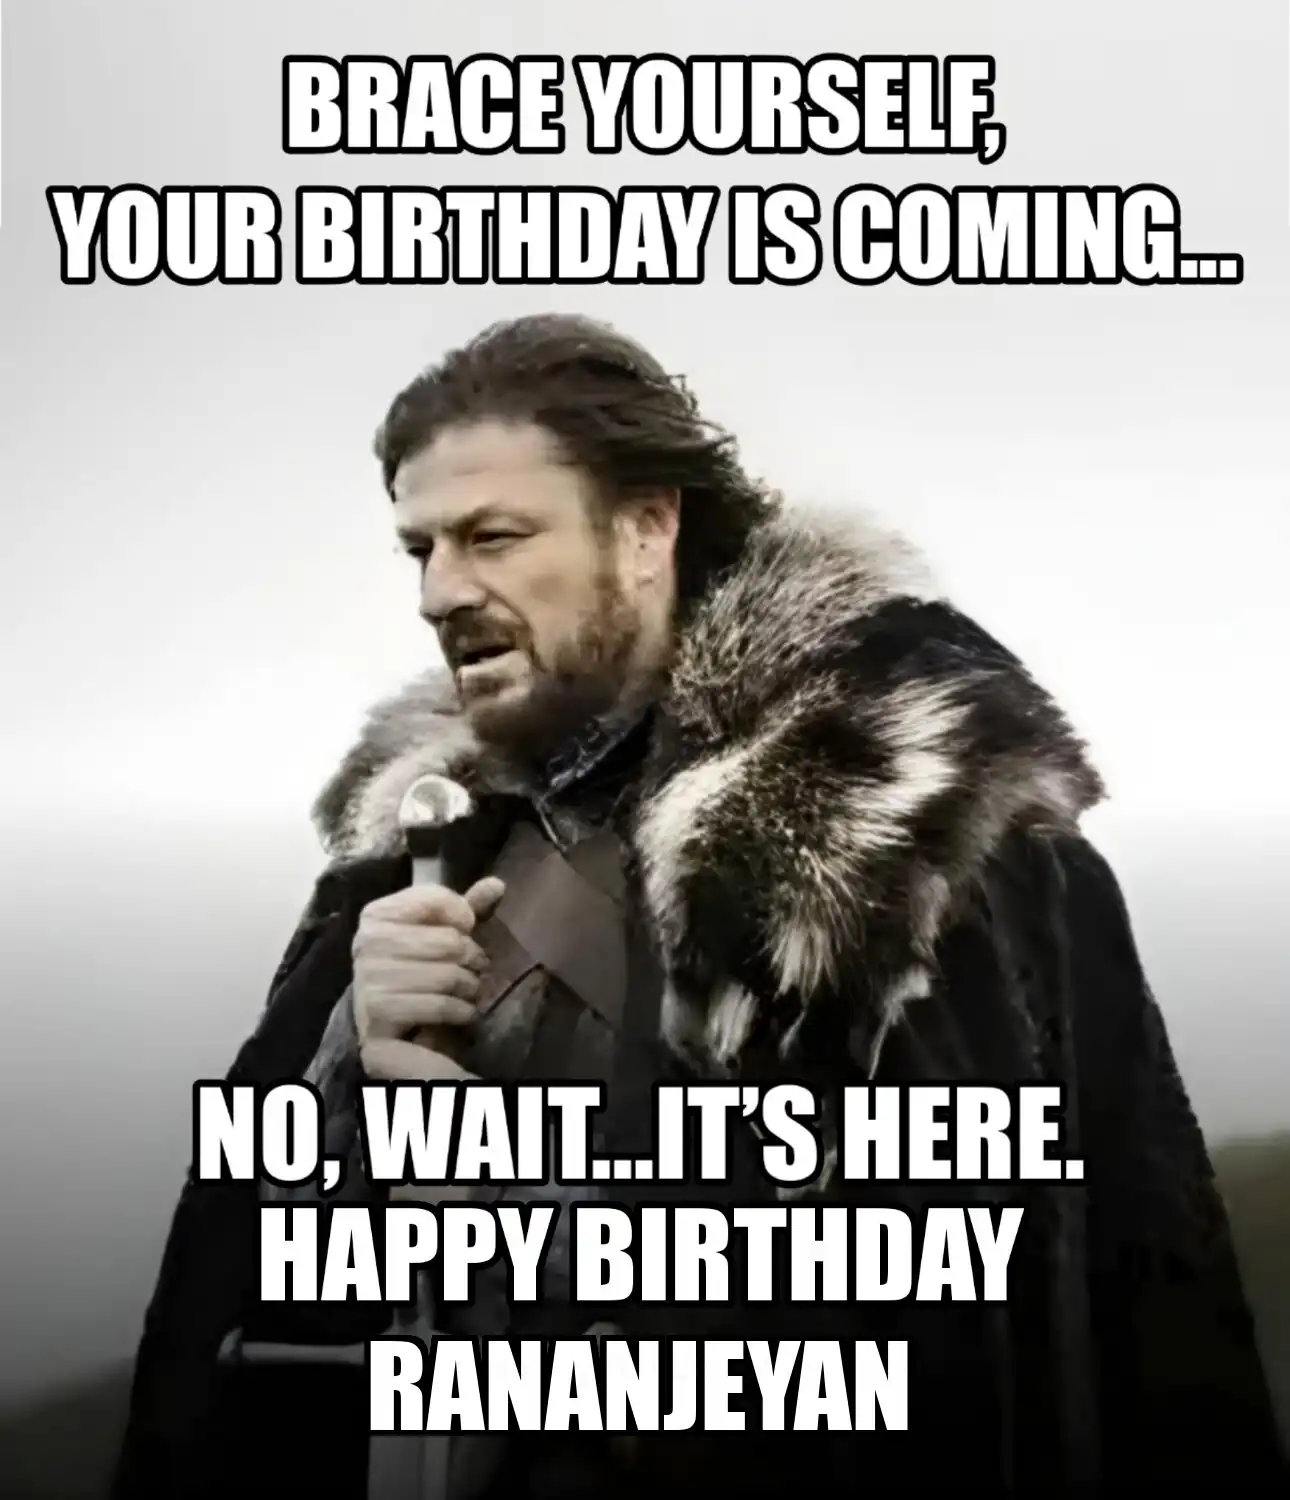 Happy Birthday Rananjeyan Brace Yourself Your Birthday Is Coming Meme